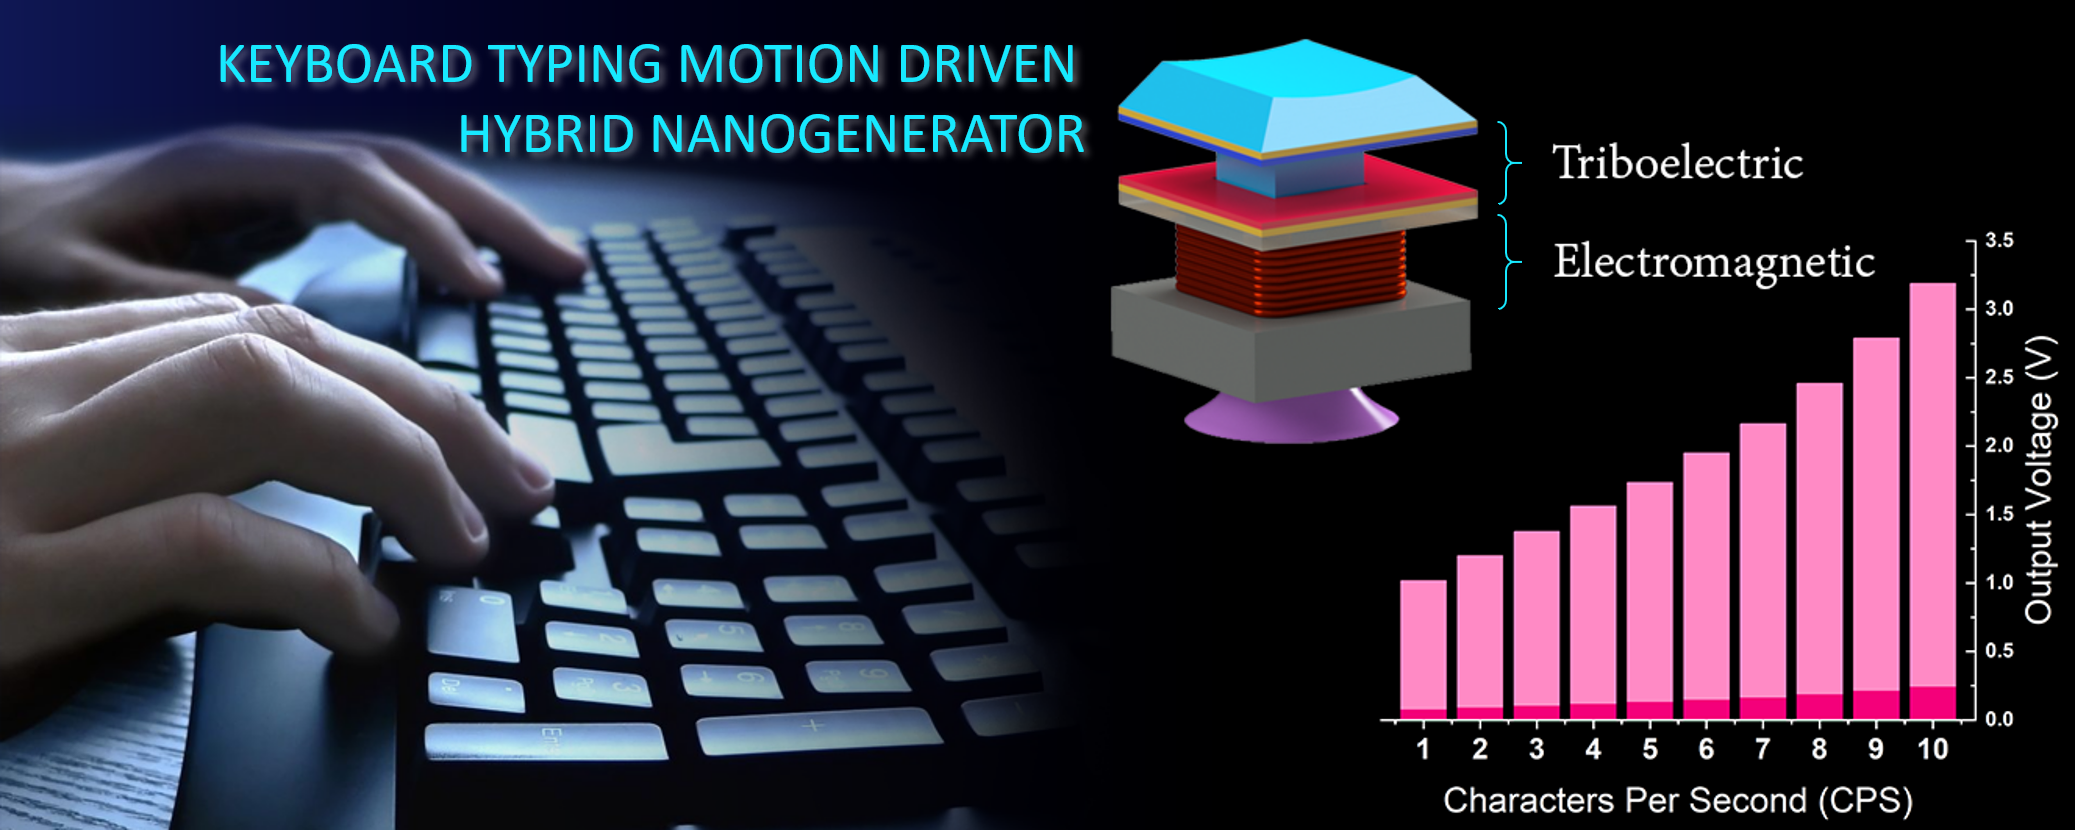 High-performance keyboard typing motion driven hybrid nanogenerator